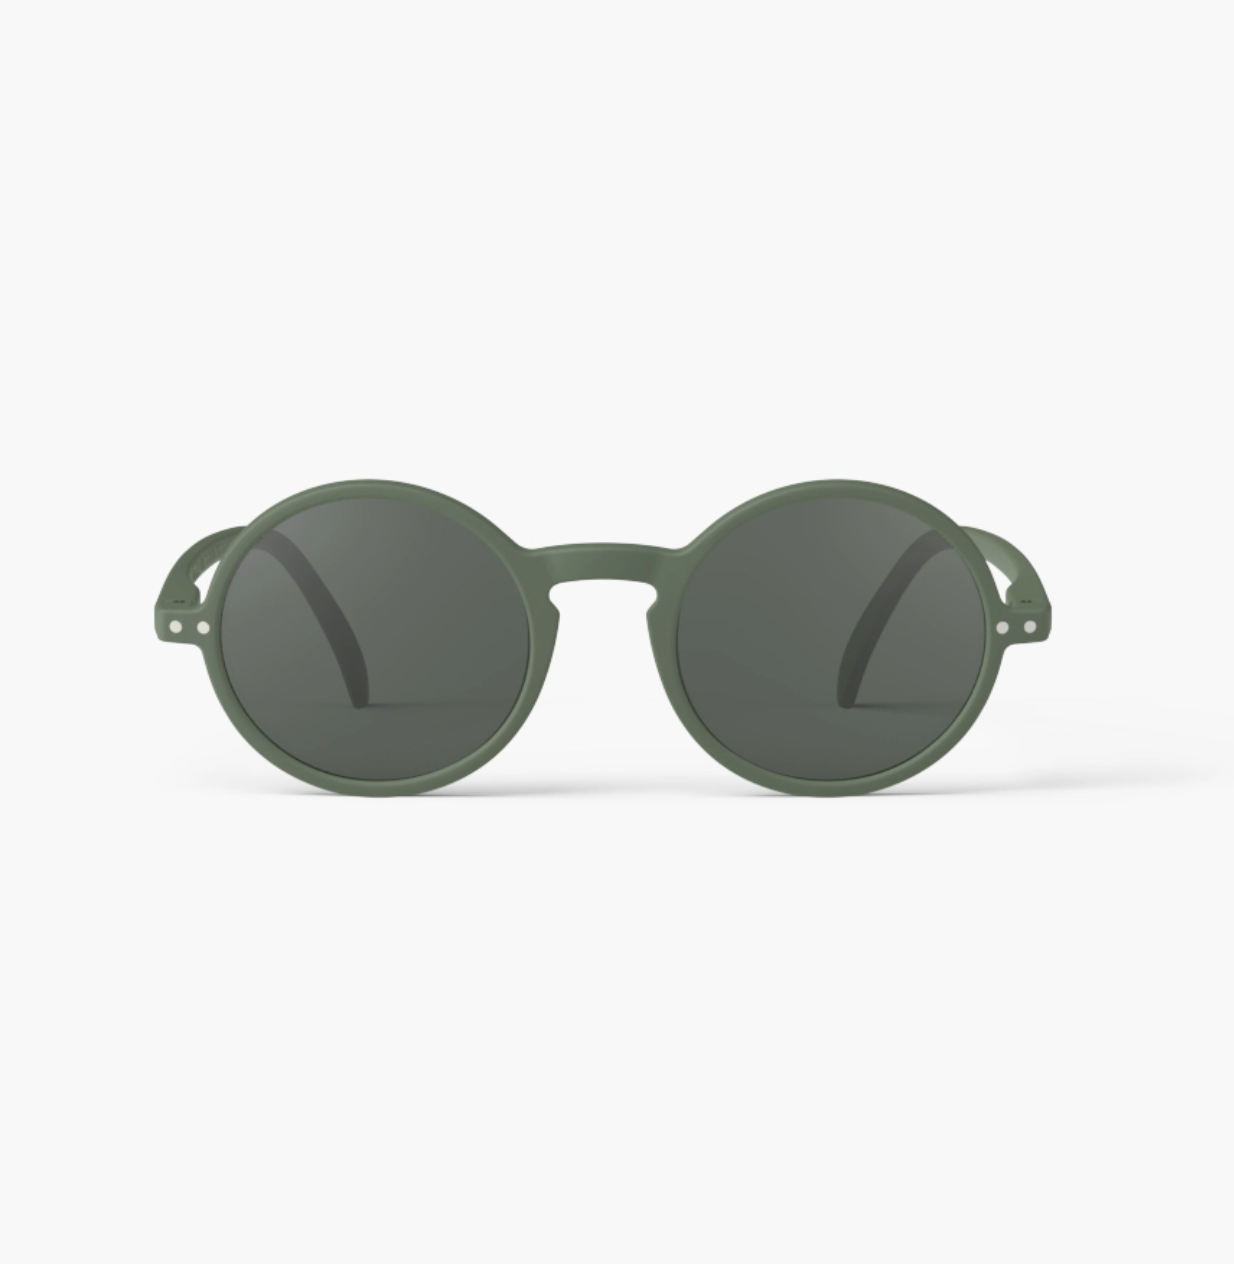 Adult Unisex Sunglasses #G SUN  - Khaki Green